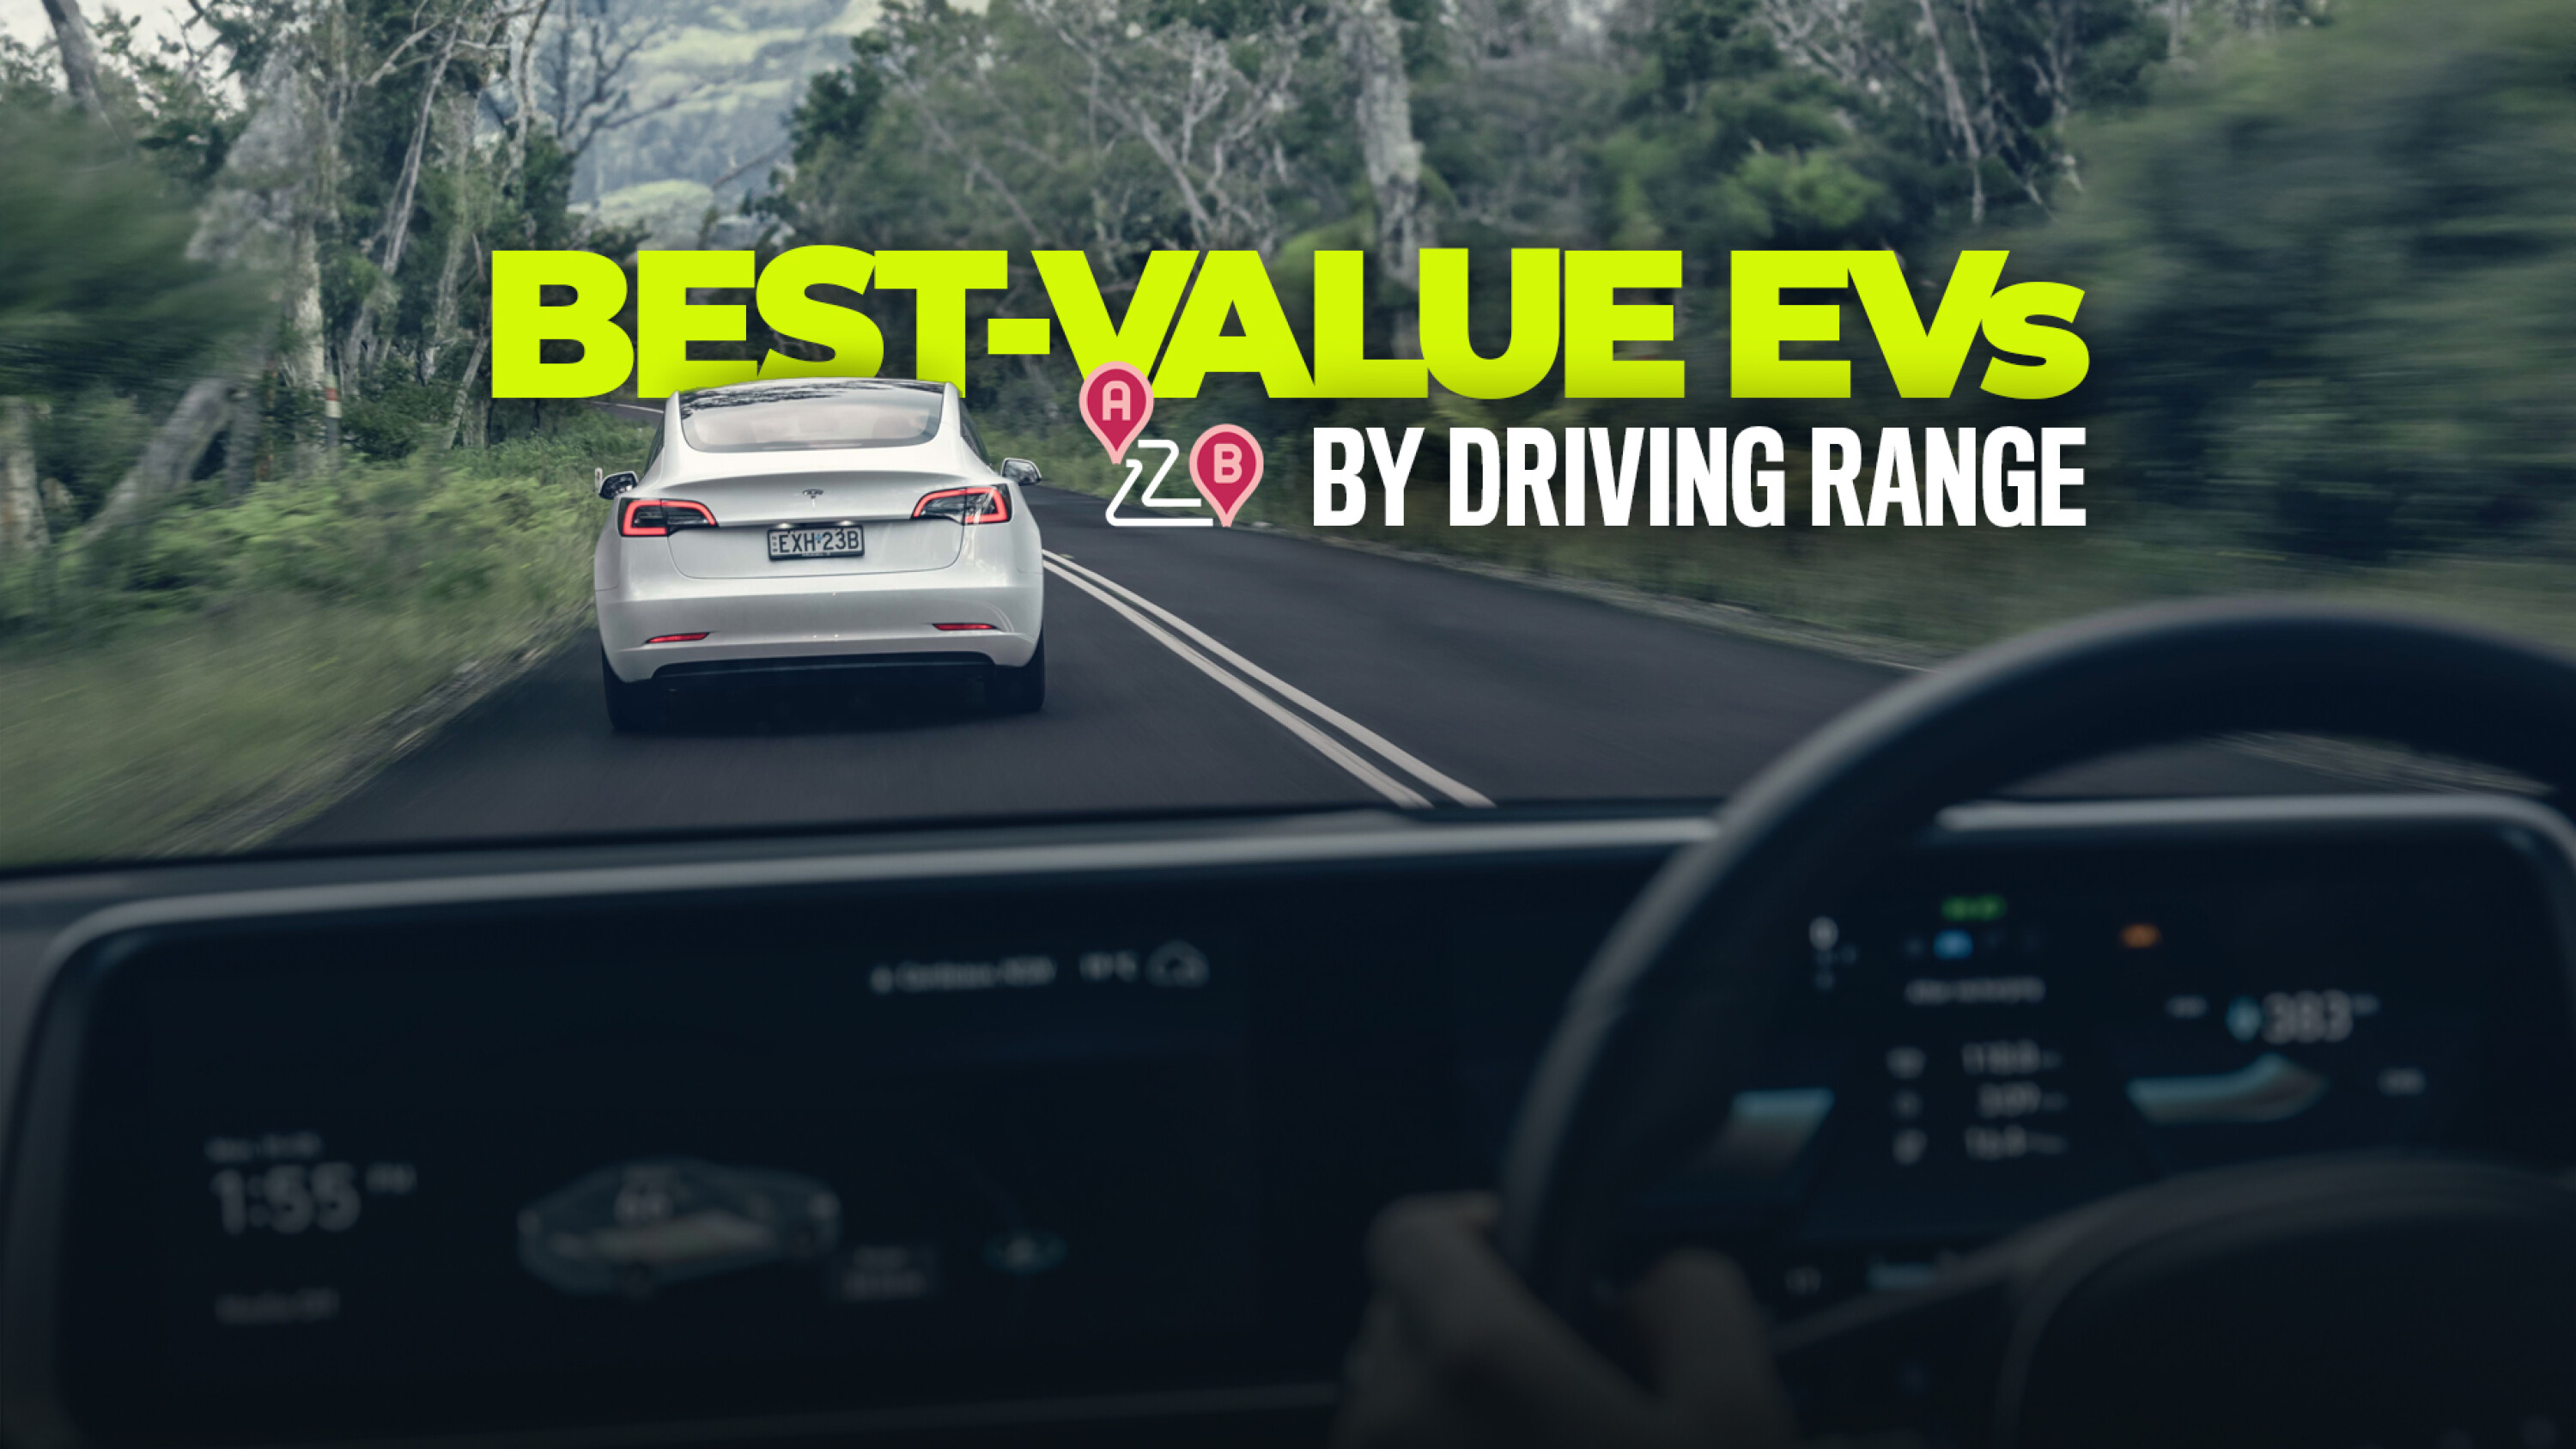 e6e819c2/best value electric vehicles by driving range jpg